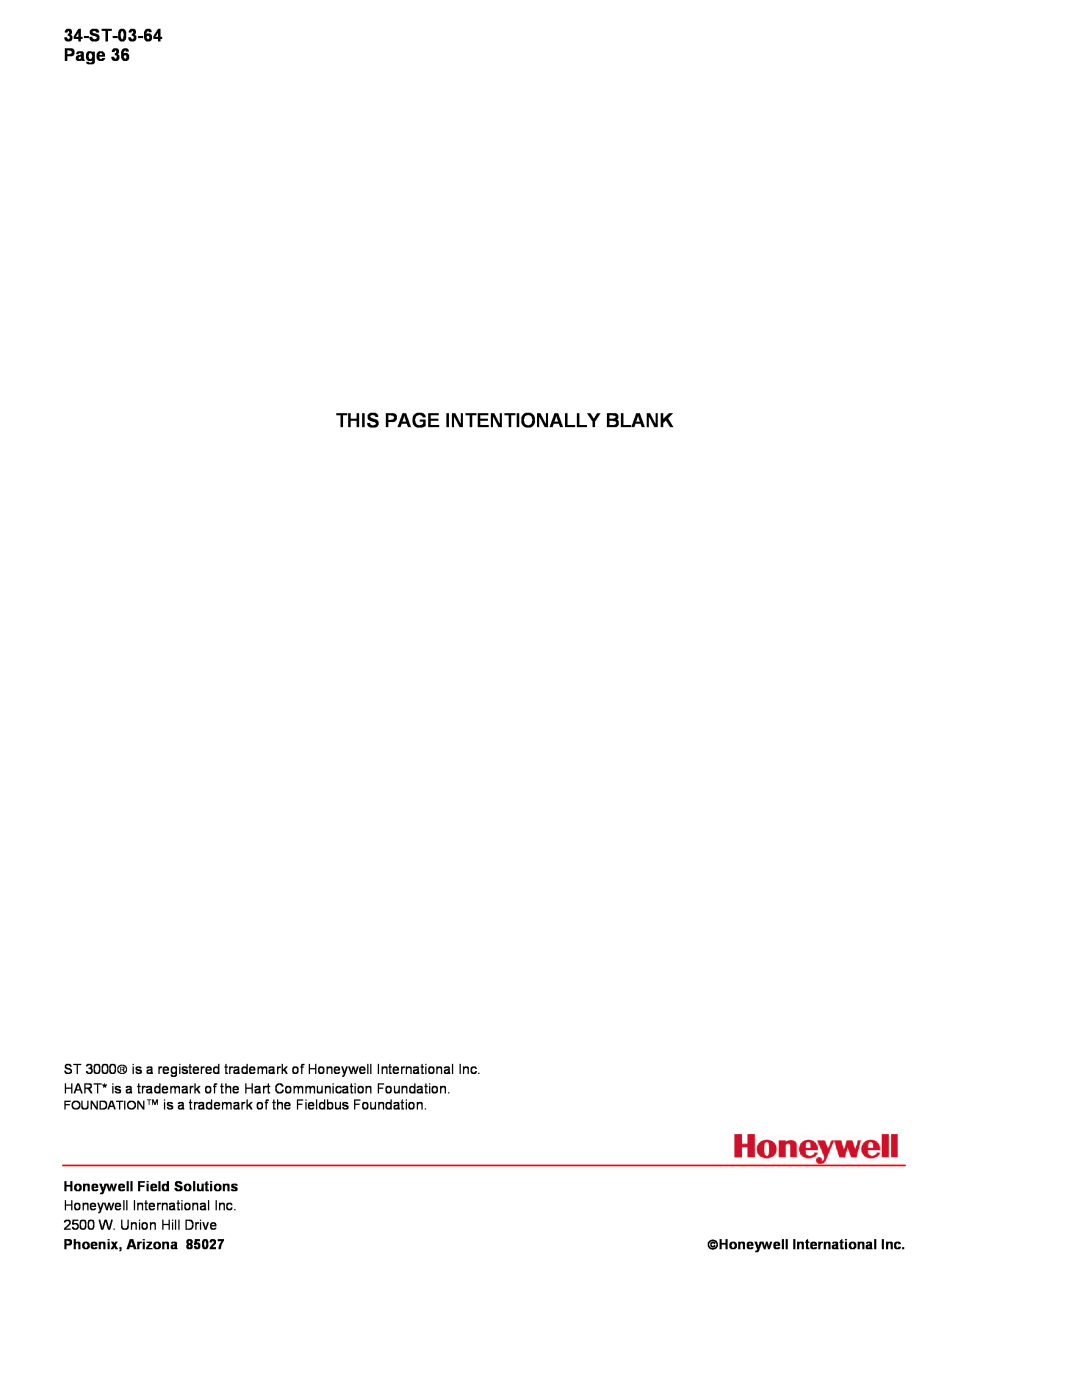 Honeywell STR12D warranty This Page Intentionally Blank, Honeywell Field Solutions, Phoenix, Arizona 